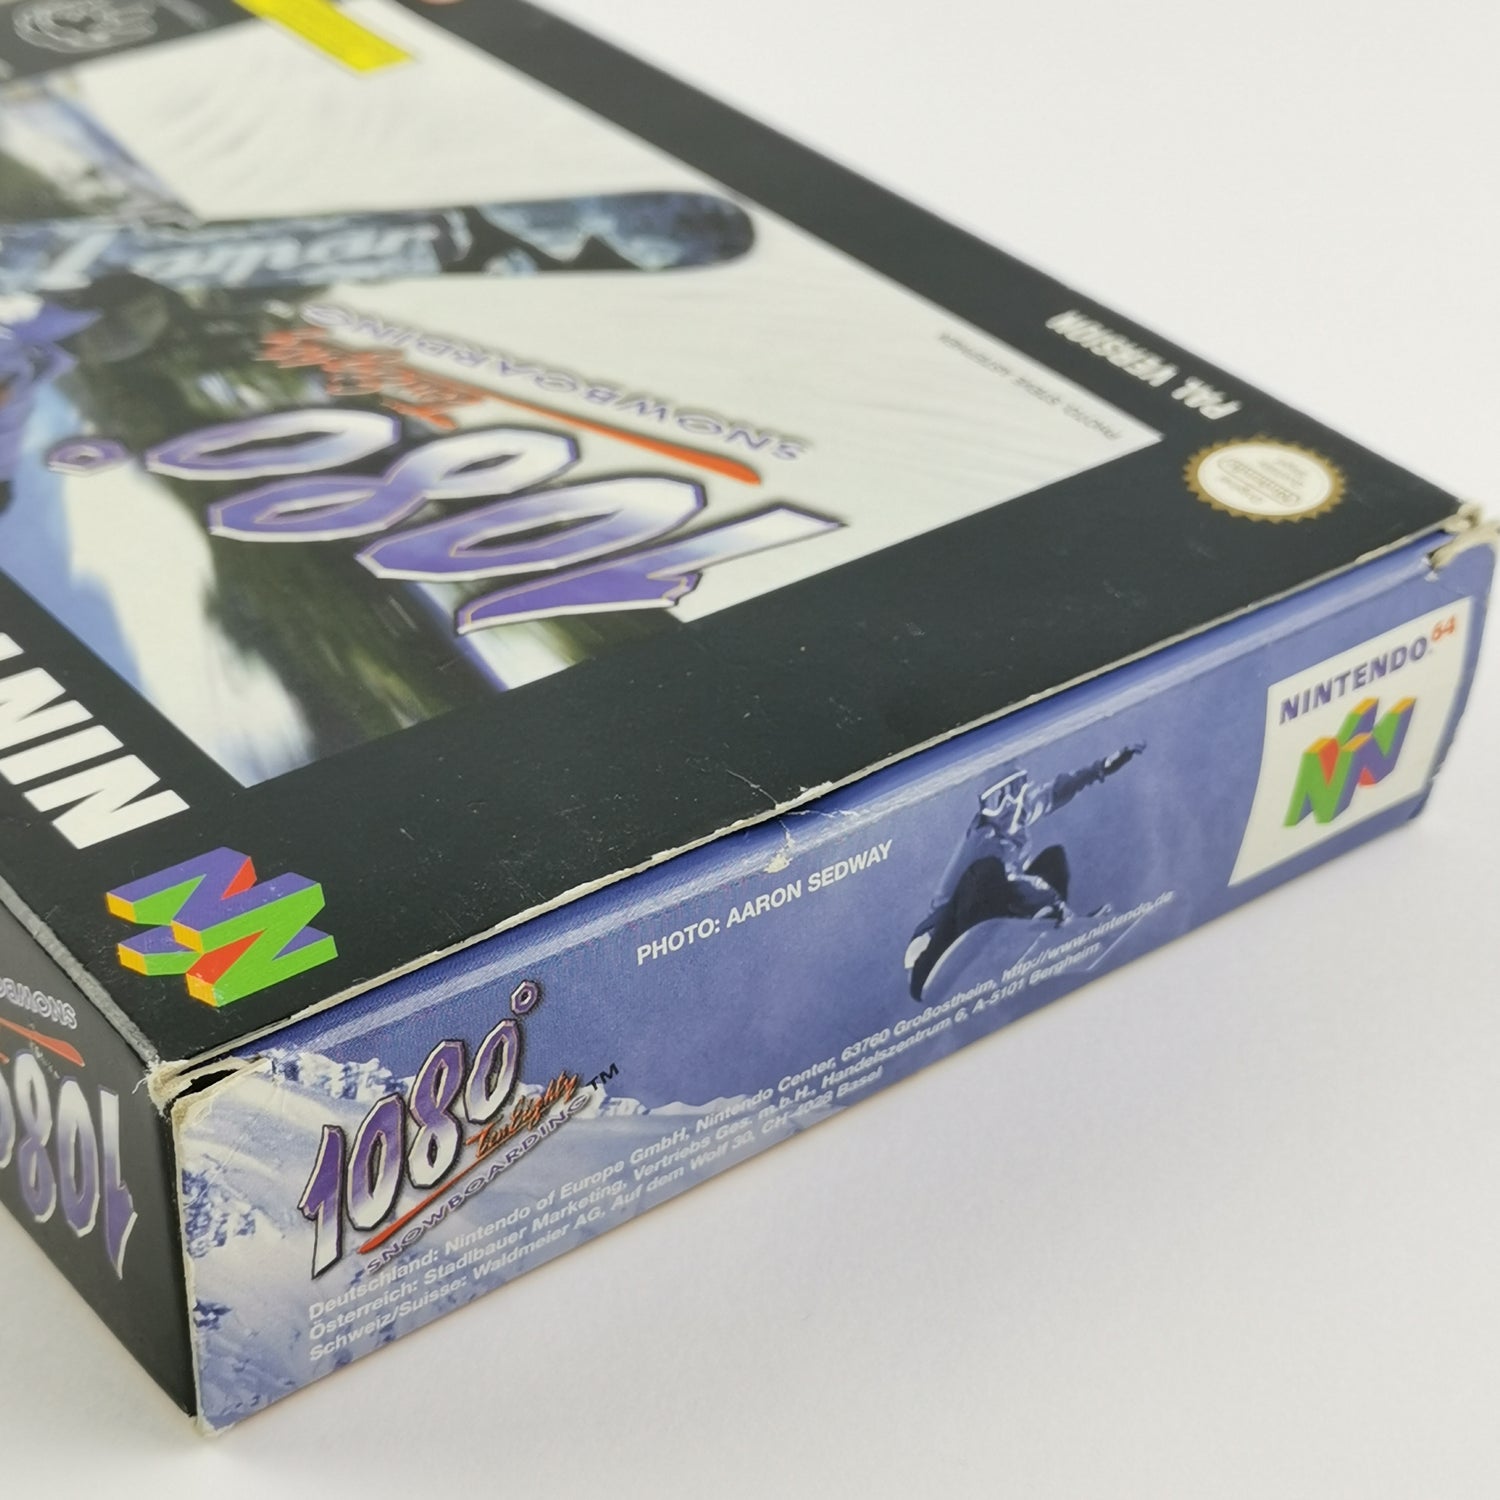 Nintendo 64 game: 1080° Ten Eighty Snowboarding - original packaging and instructions PAL | N64